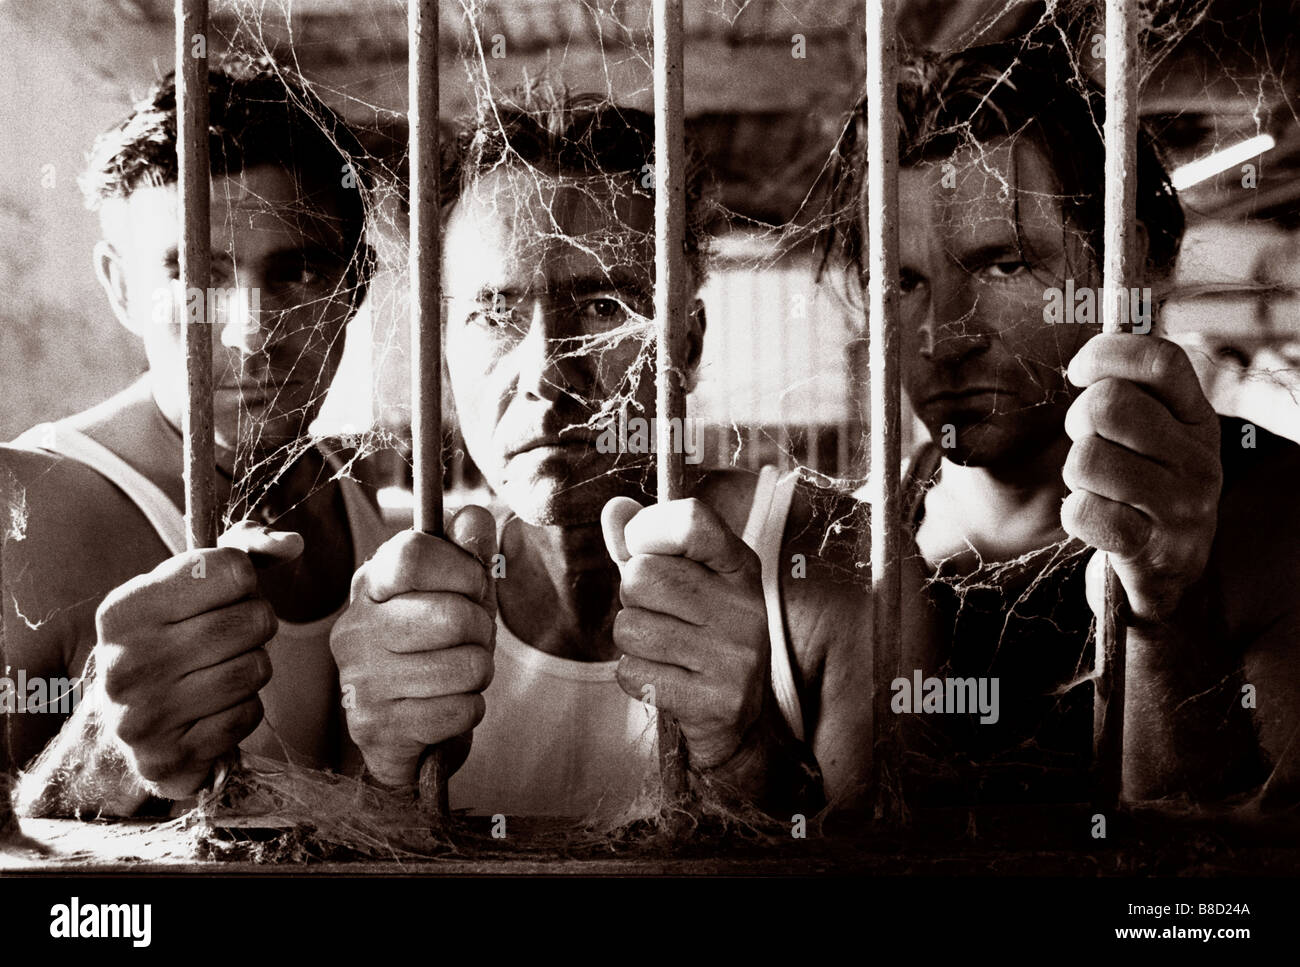 FV3044, Malek Chamoun; BW 3 Men Behind Bars Stock Photo